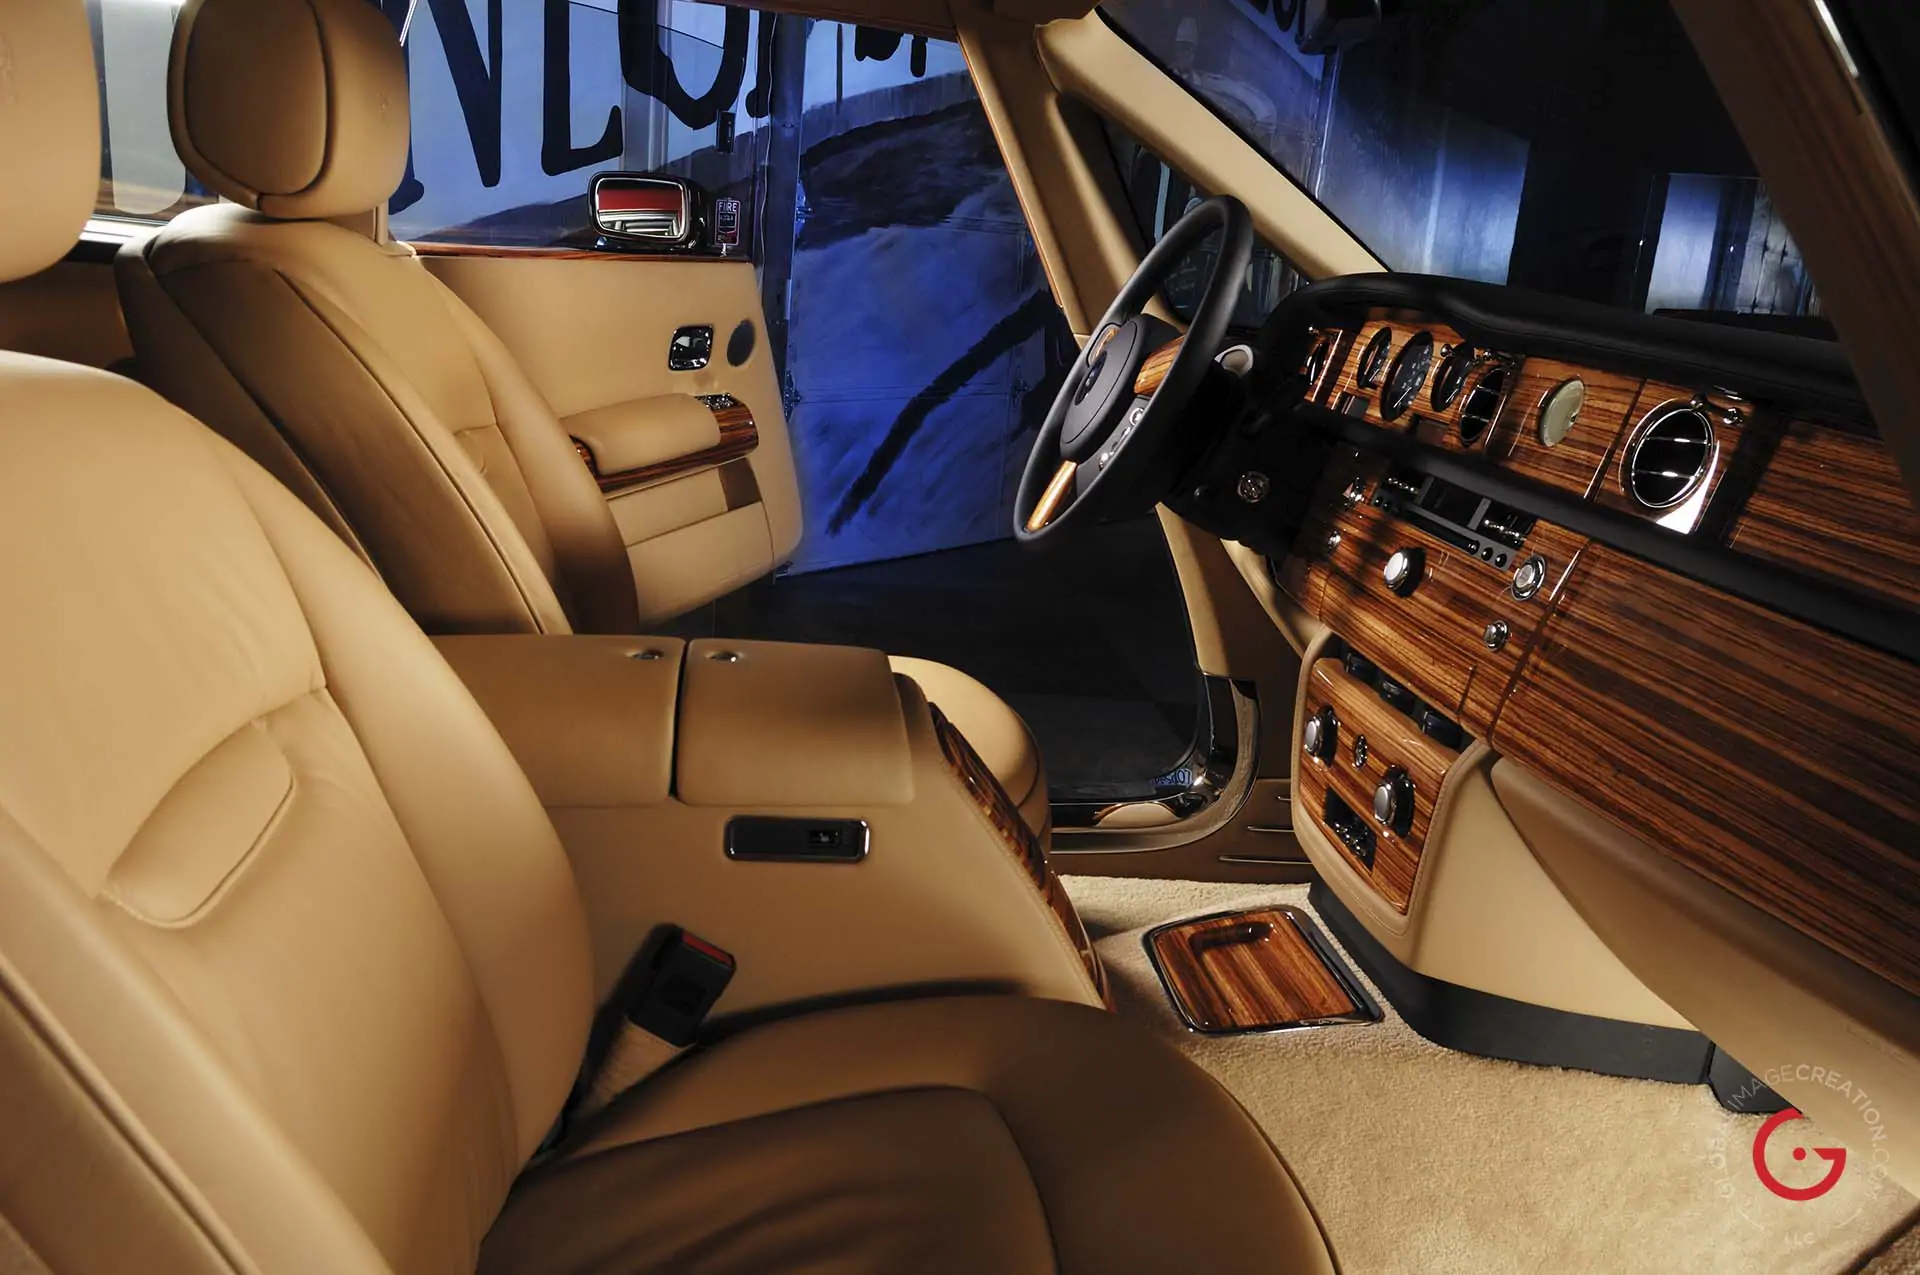 Rolls Royce Phantom Interior - Professional Car Photographer, Automotive Photography